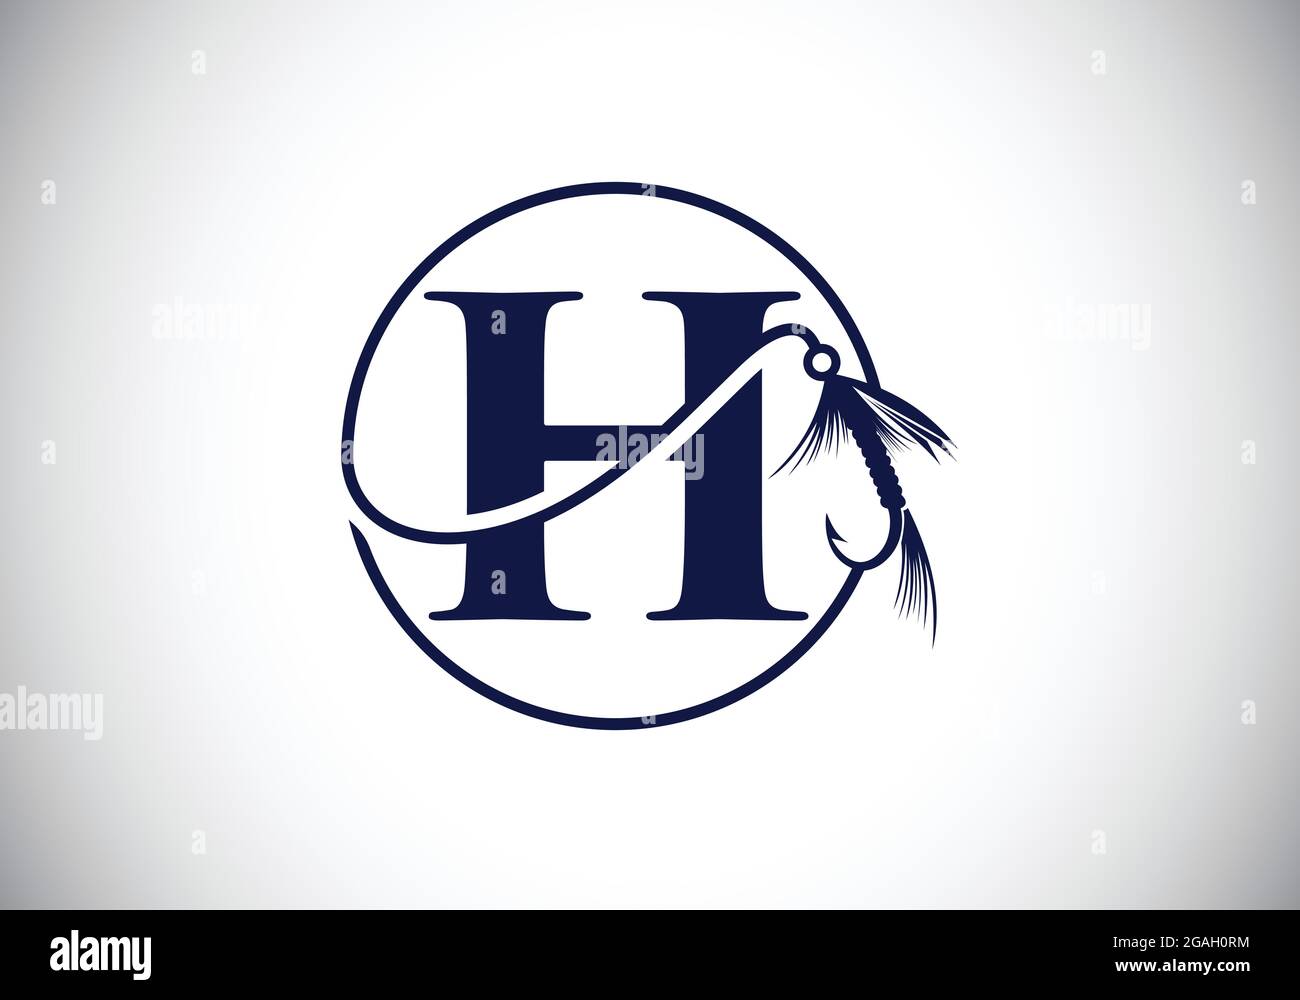 https://c8.alamy.com/comp/2GAH0RM/initial-h-monogram-letter-alphabet-with-fishing-hook-fishing-logo-concept-vector-illustration-modern-logo-design-for-fishing-shop-business-2GAH0RM.jpg